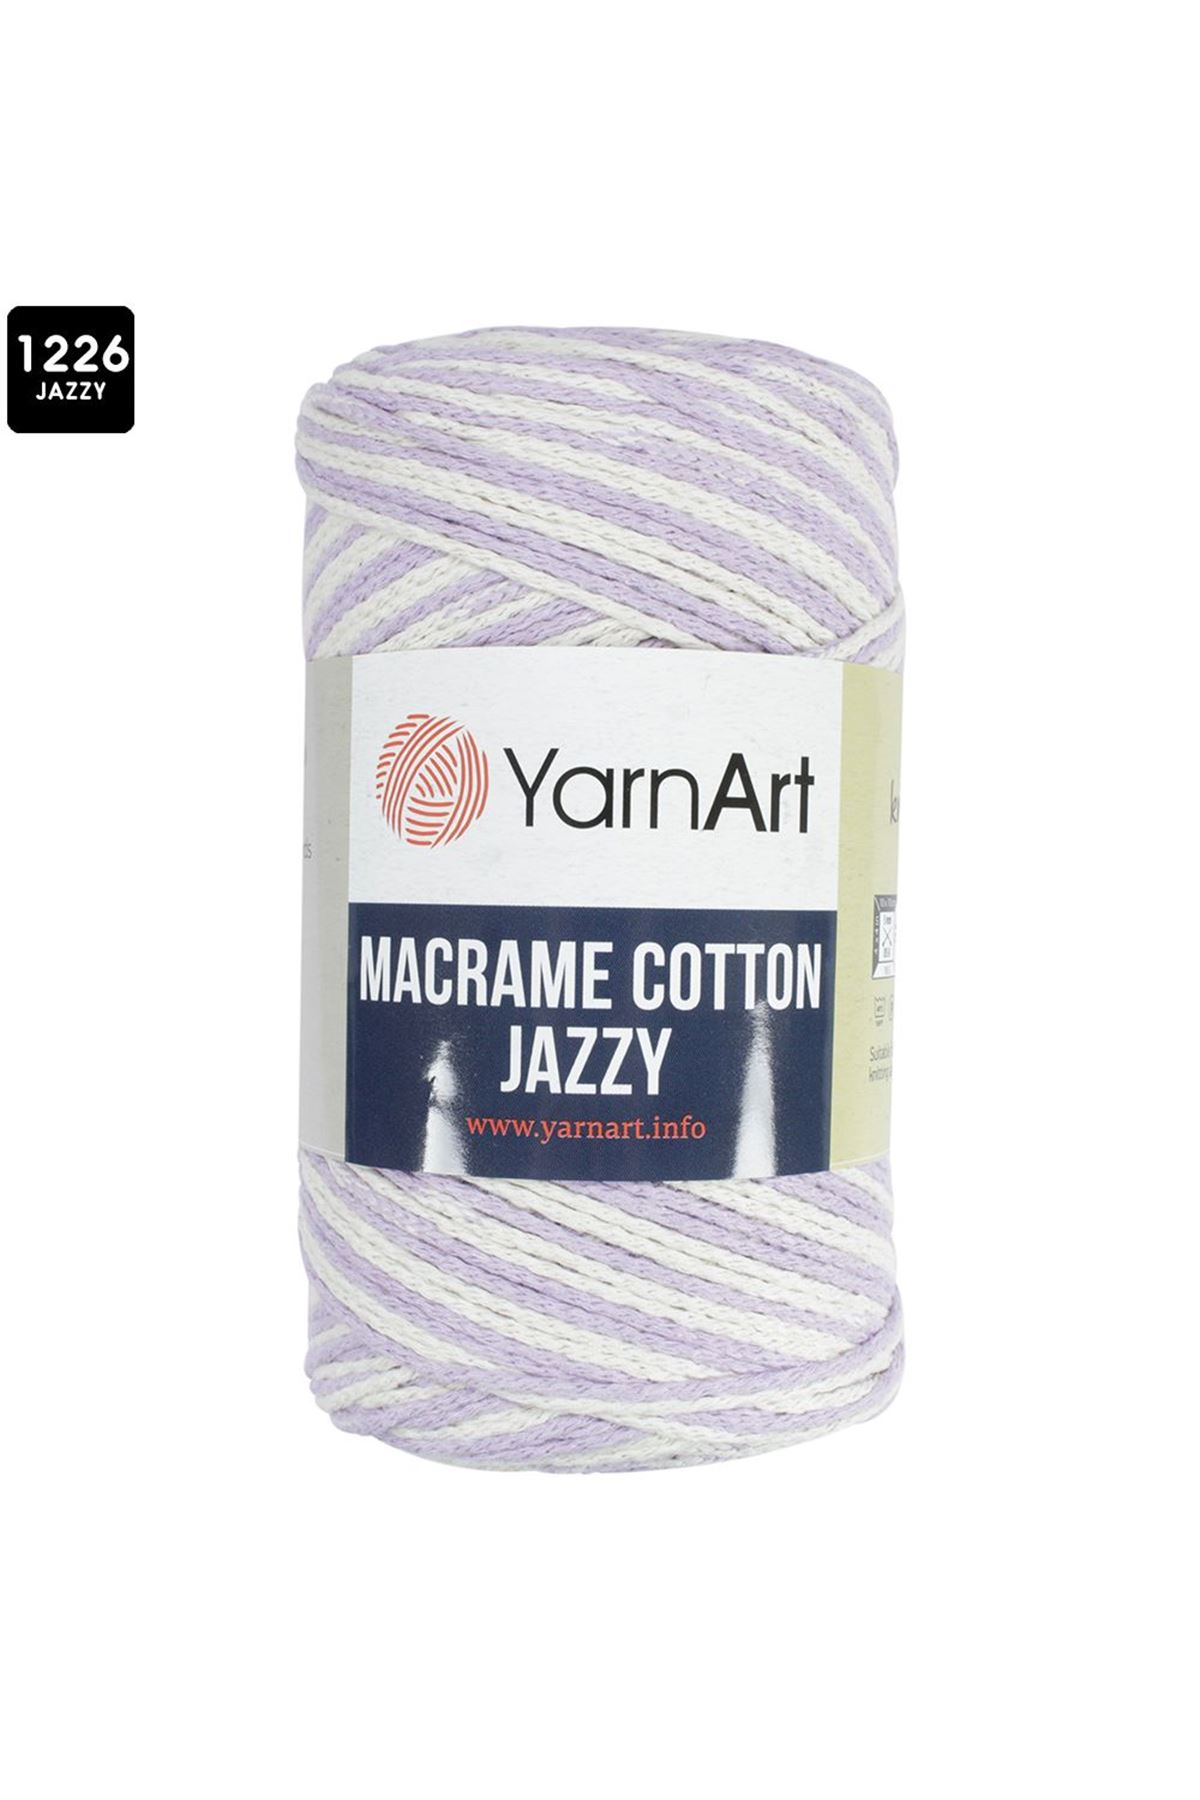 Yarnart Macrame Cotton Jazzy Renk No:1226